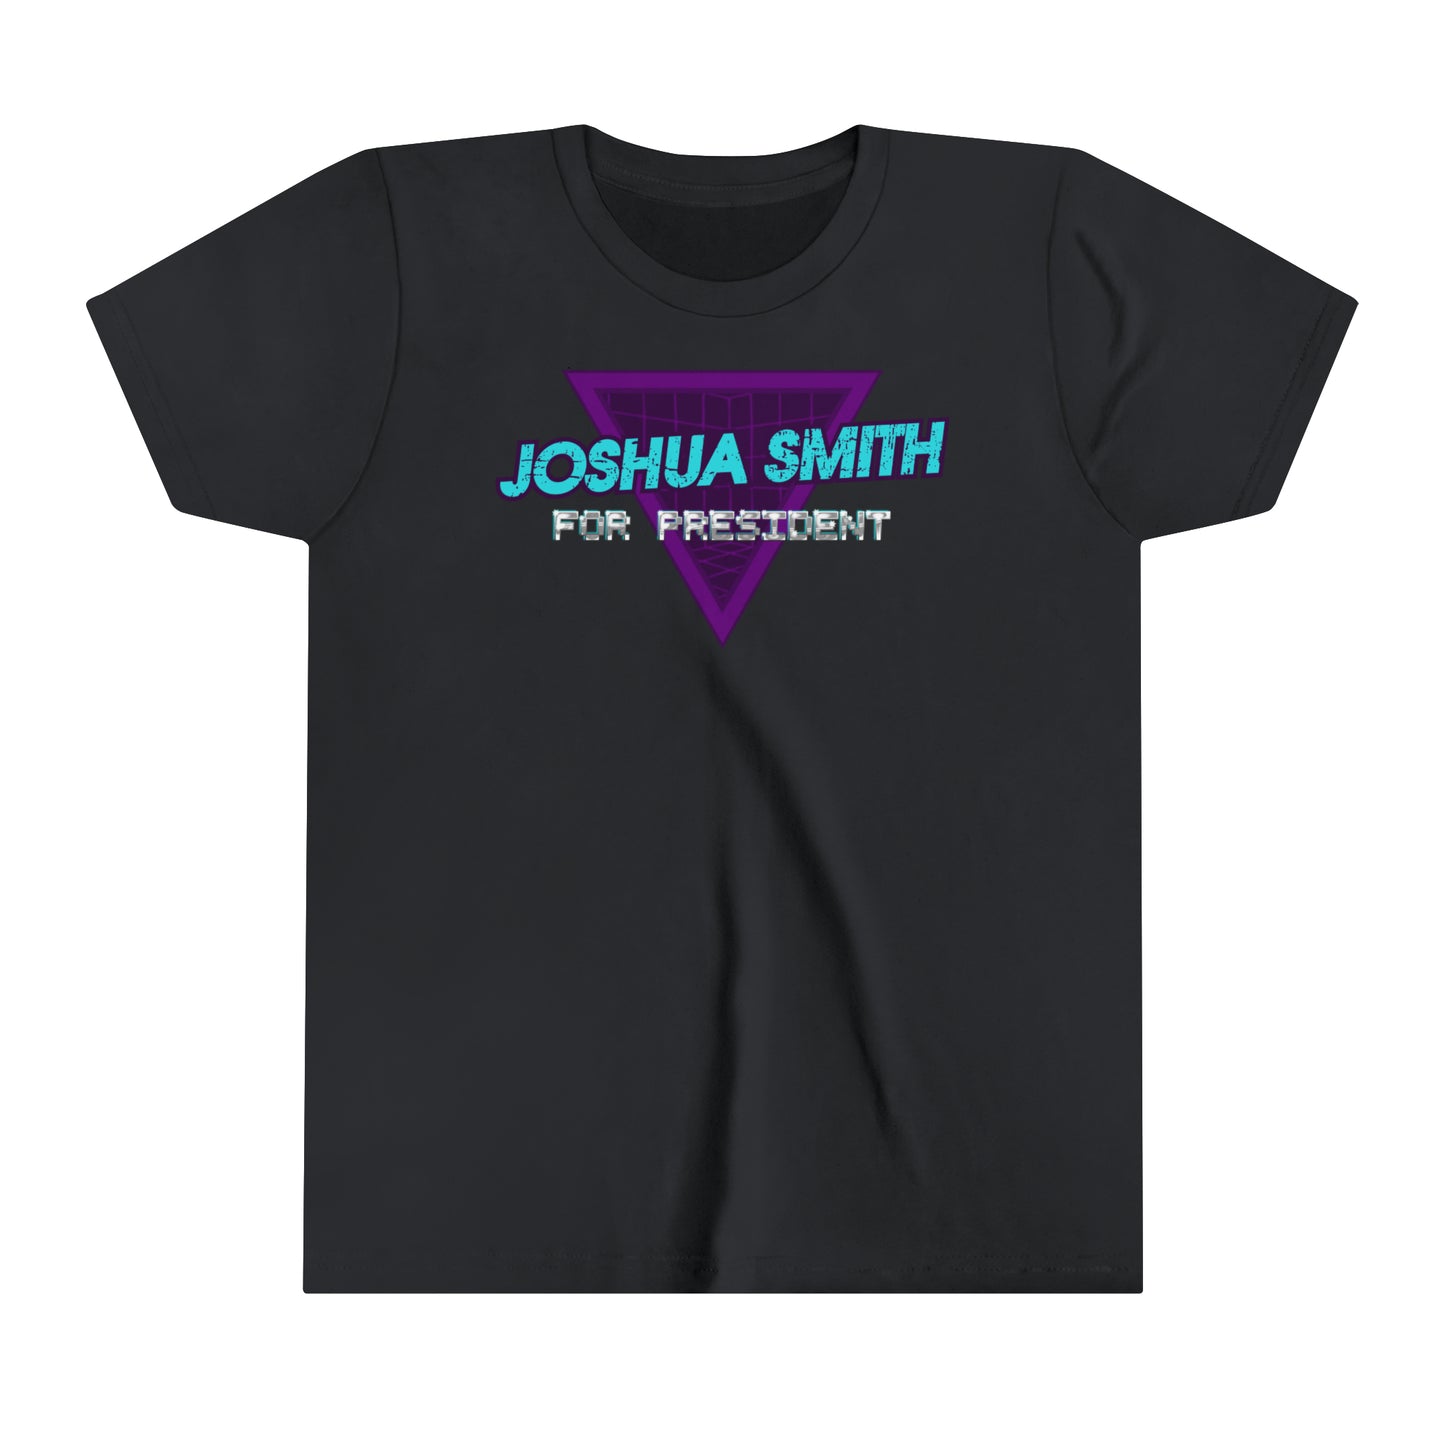 Joshua Smith for President Youth Short Sleeve Tee